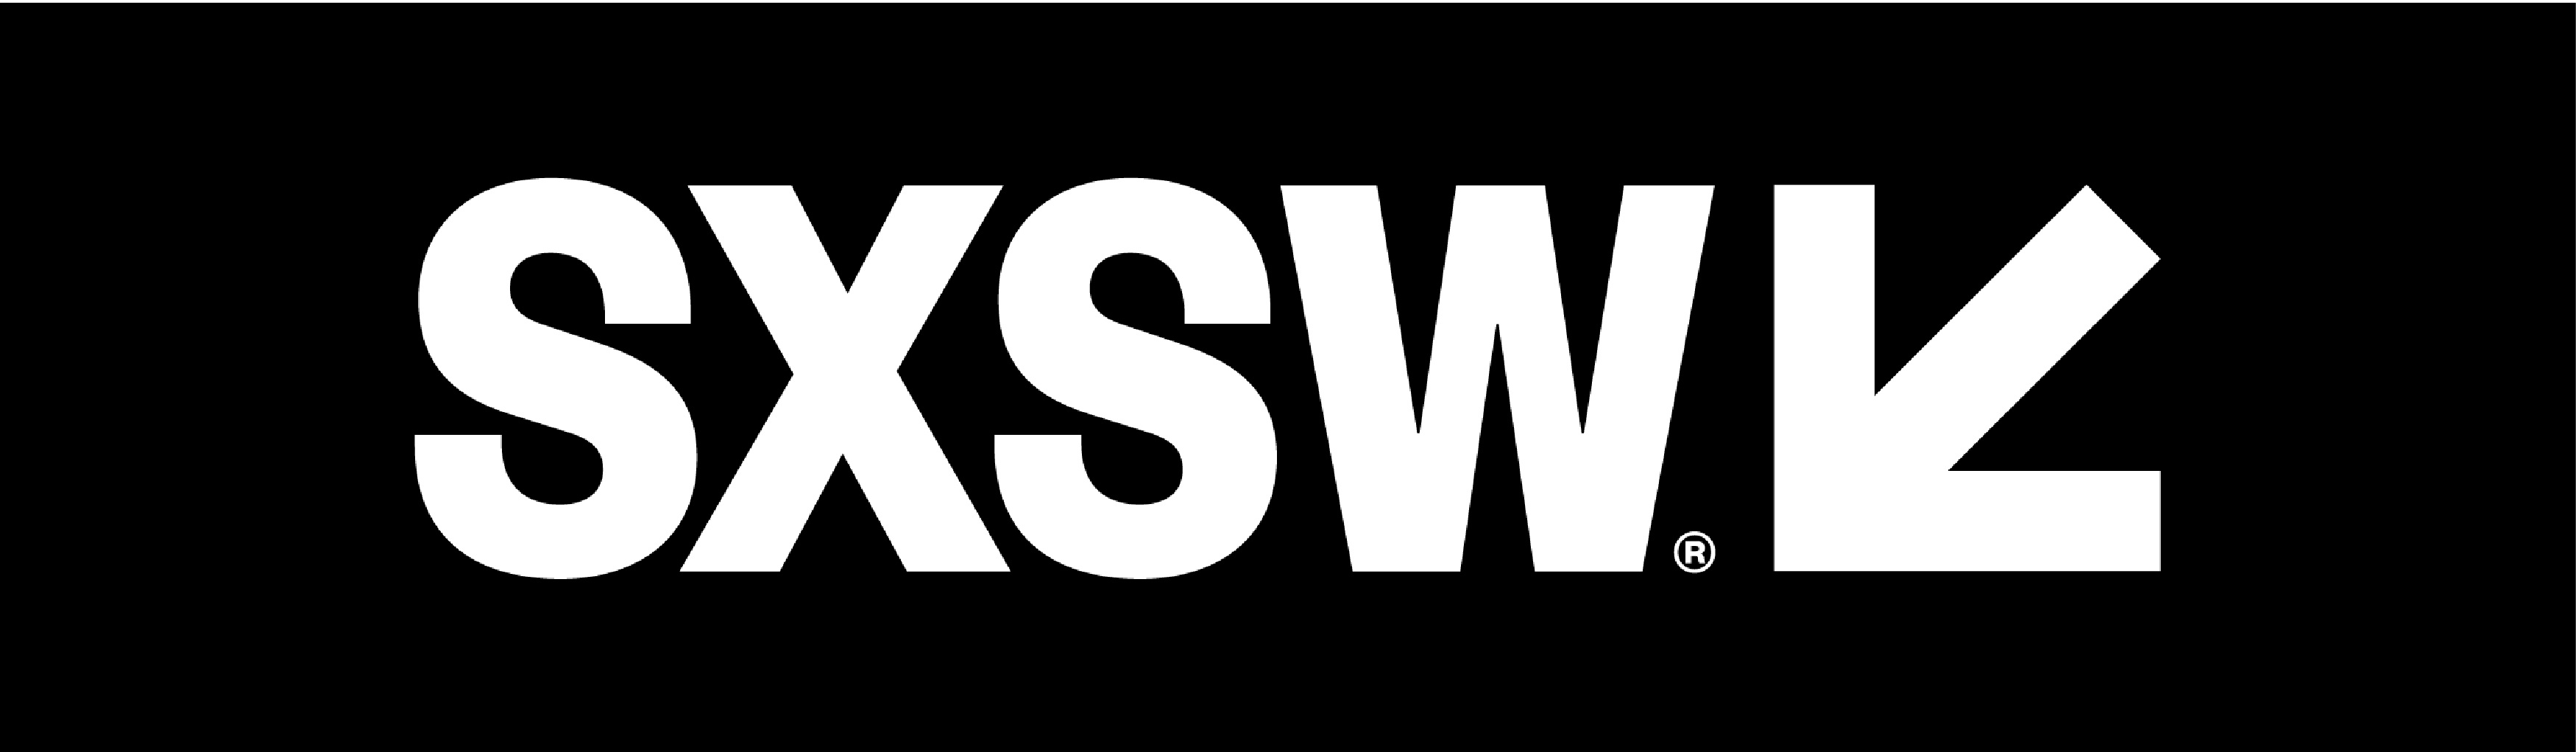 SXSW Music Festival - Third Round of Showcasing Artists Announced